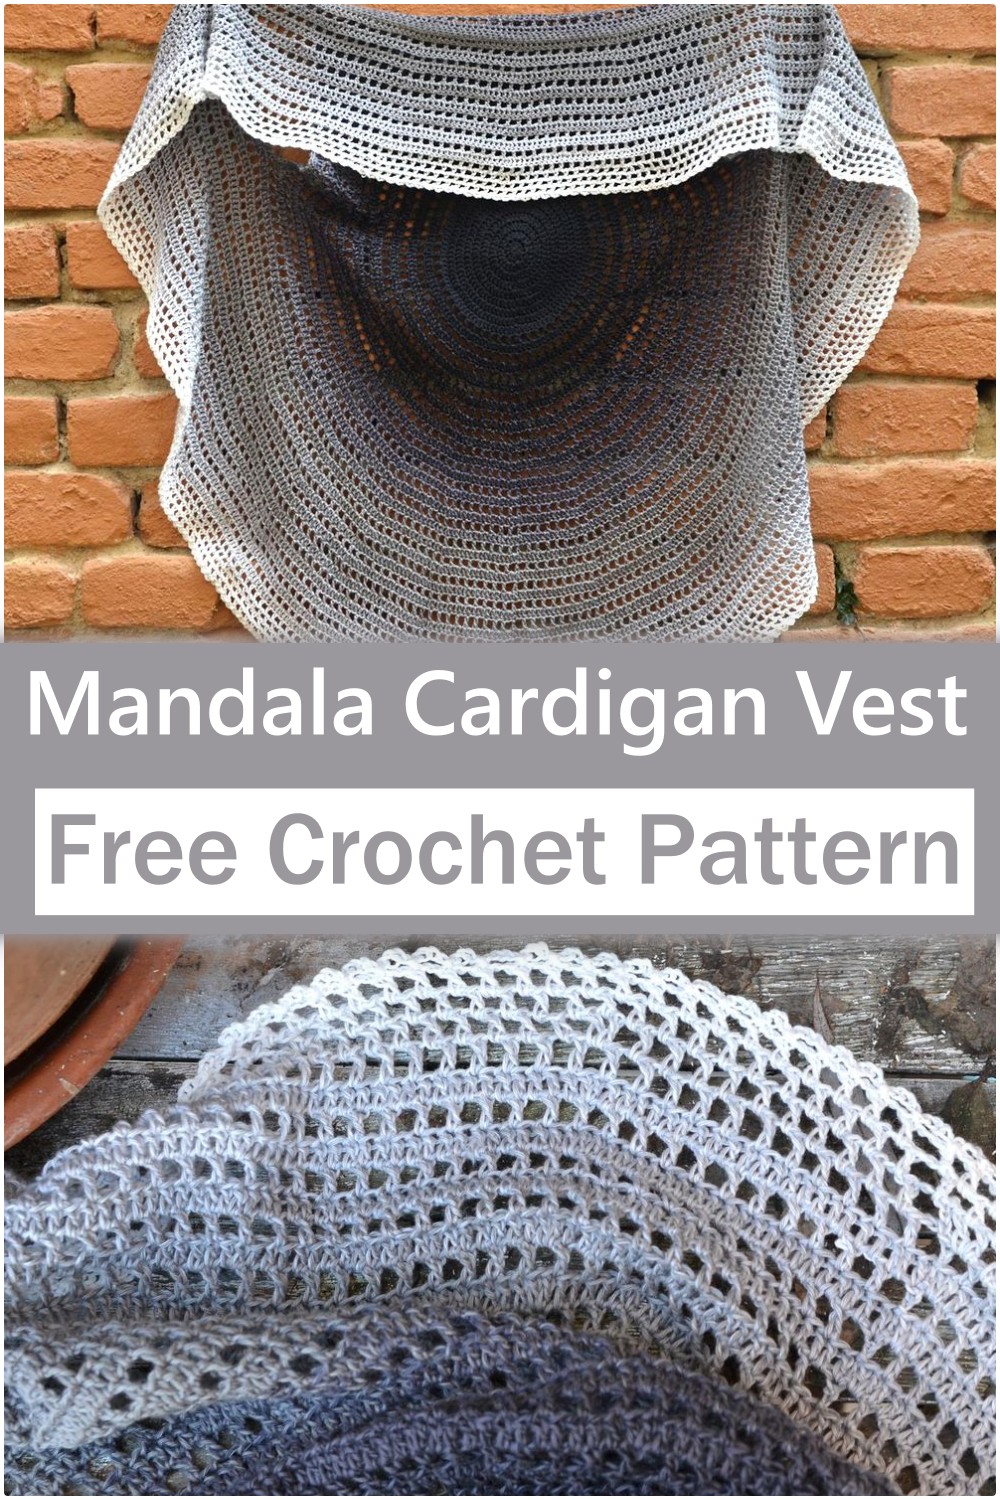 Mandala Cardigan Vest To Crochet